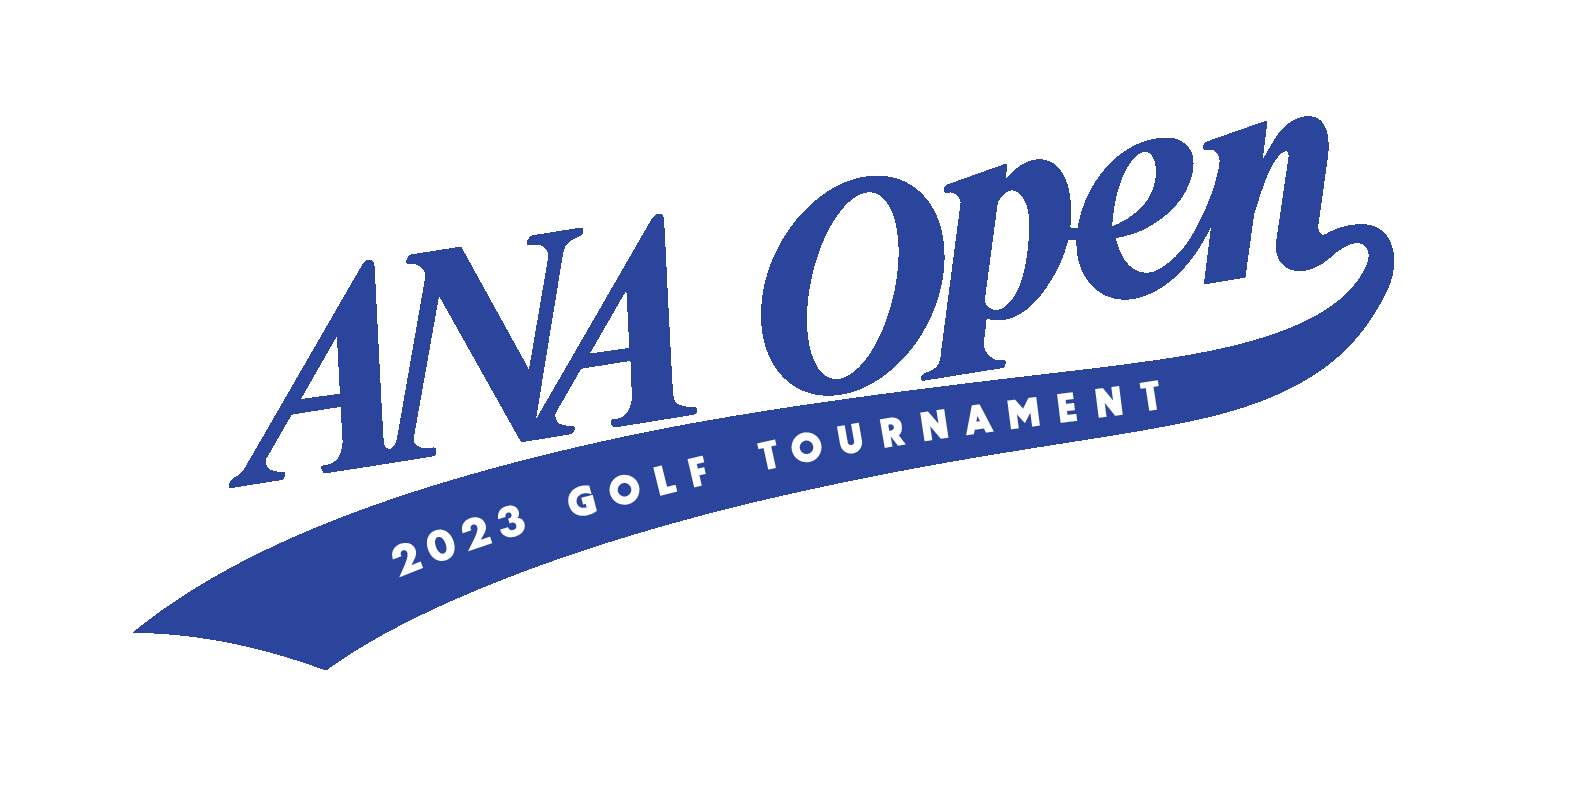 ANA Open Golf Tournament 2023